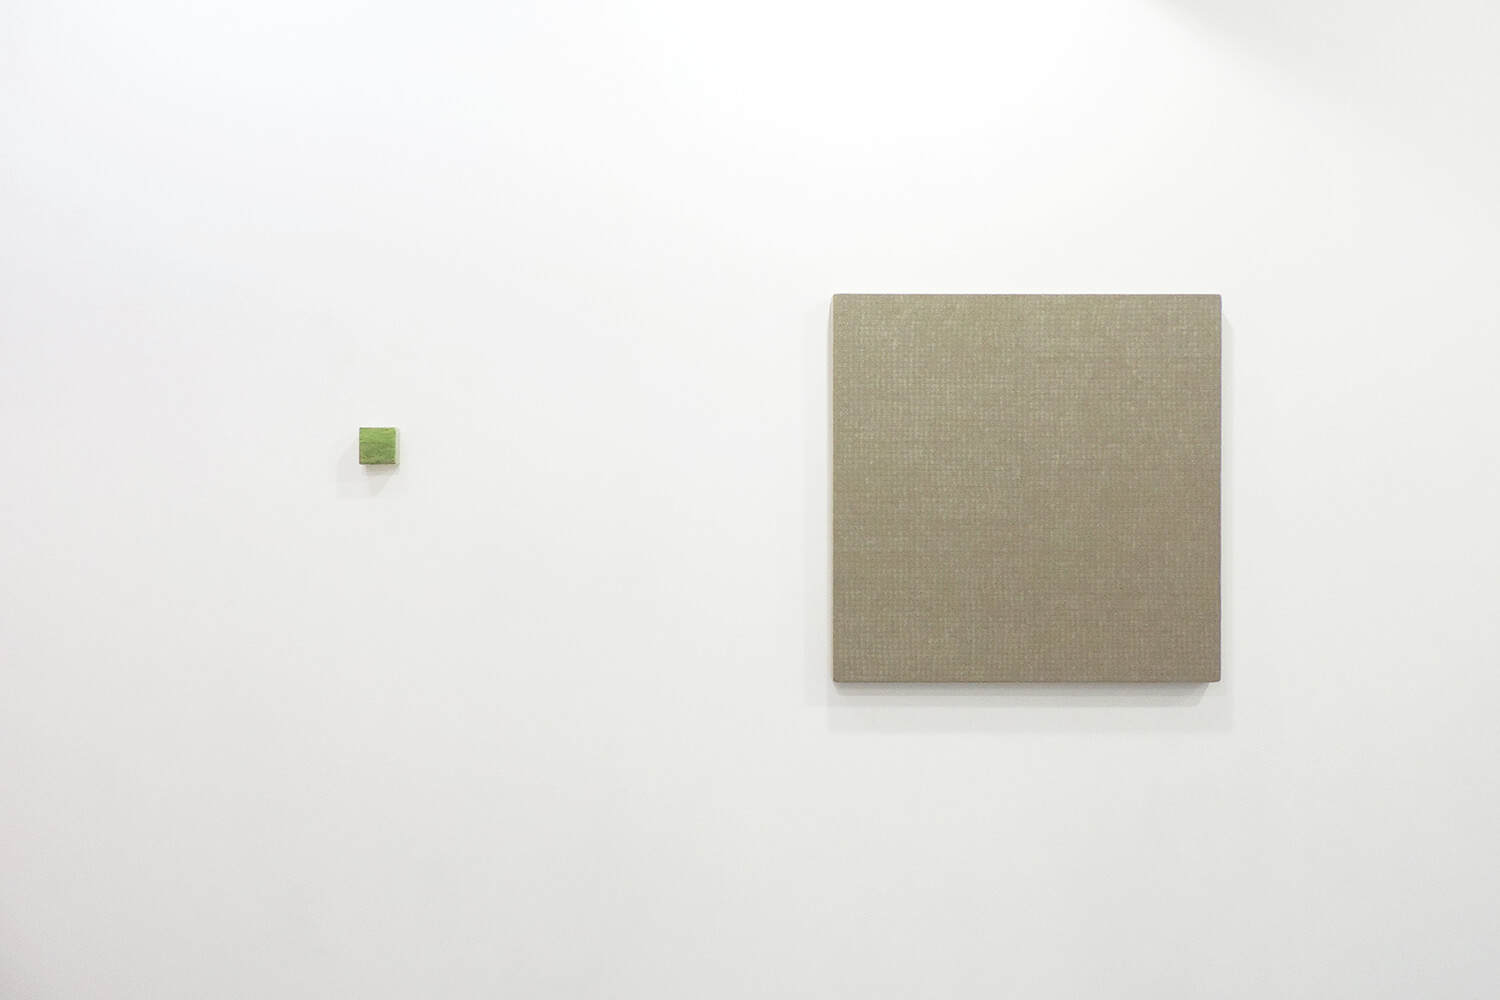 <b>川井昭夫 Akio Kawai</b><br>麻布 Hempen Cloth-square 09-1, 2009（right）<br>Photo-painting 夏草図140714-2, 2014（left）